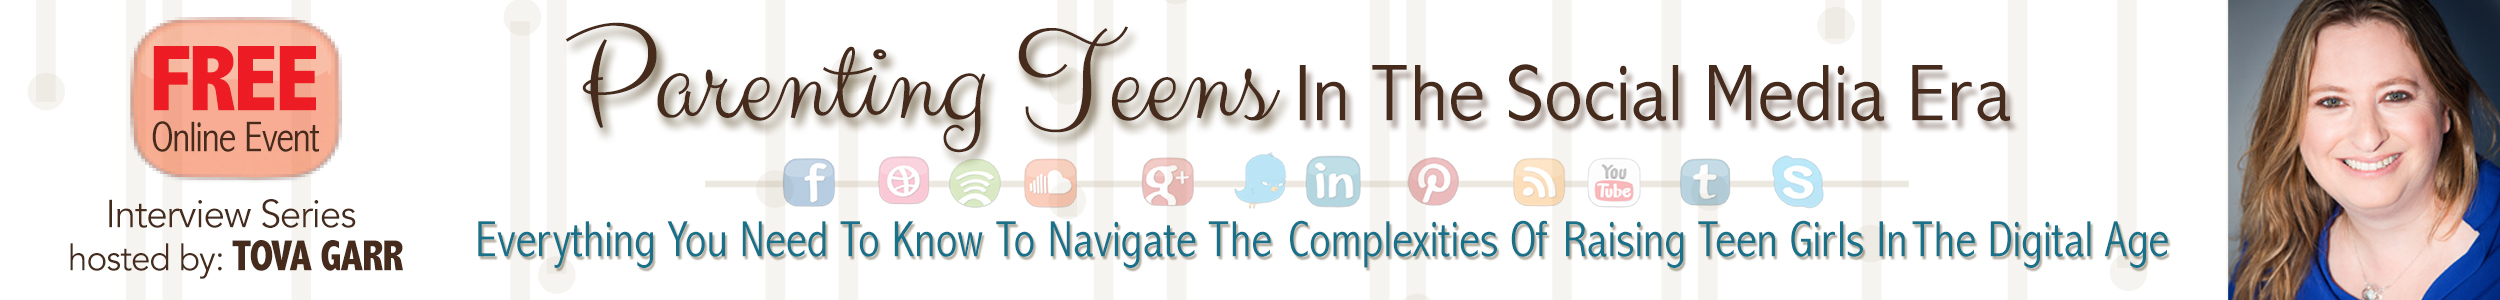 Parenting Teens and Social Media